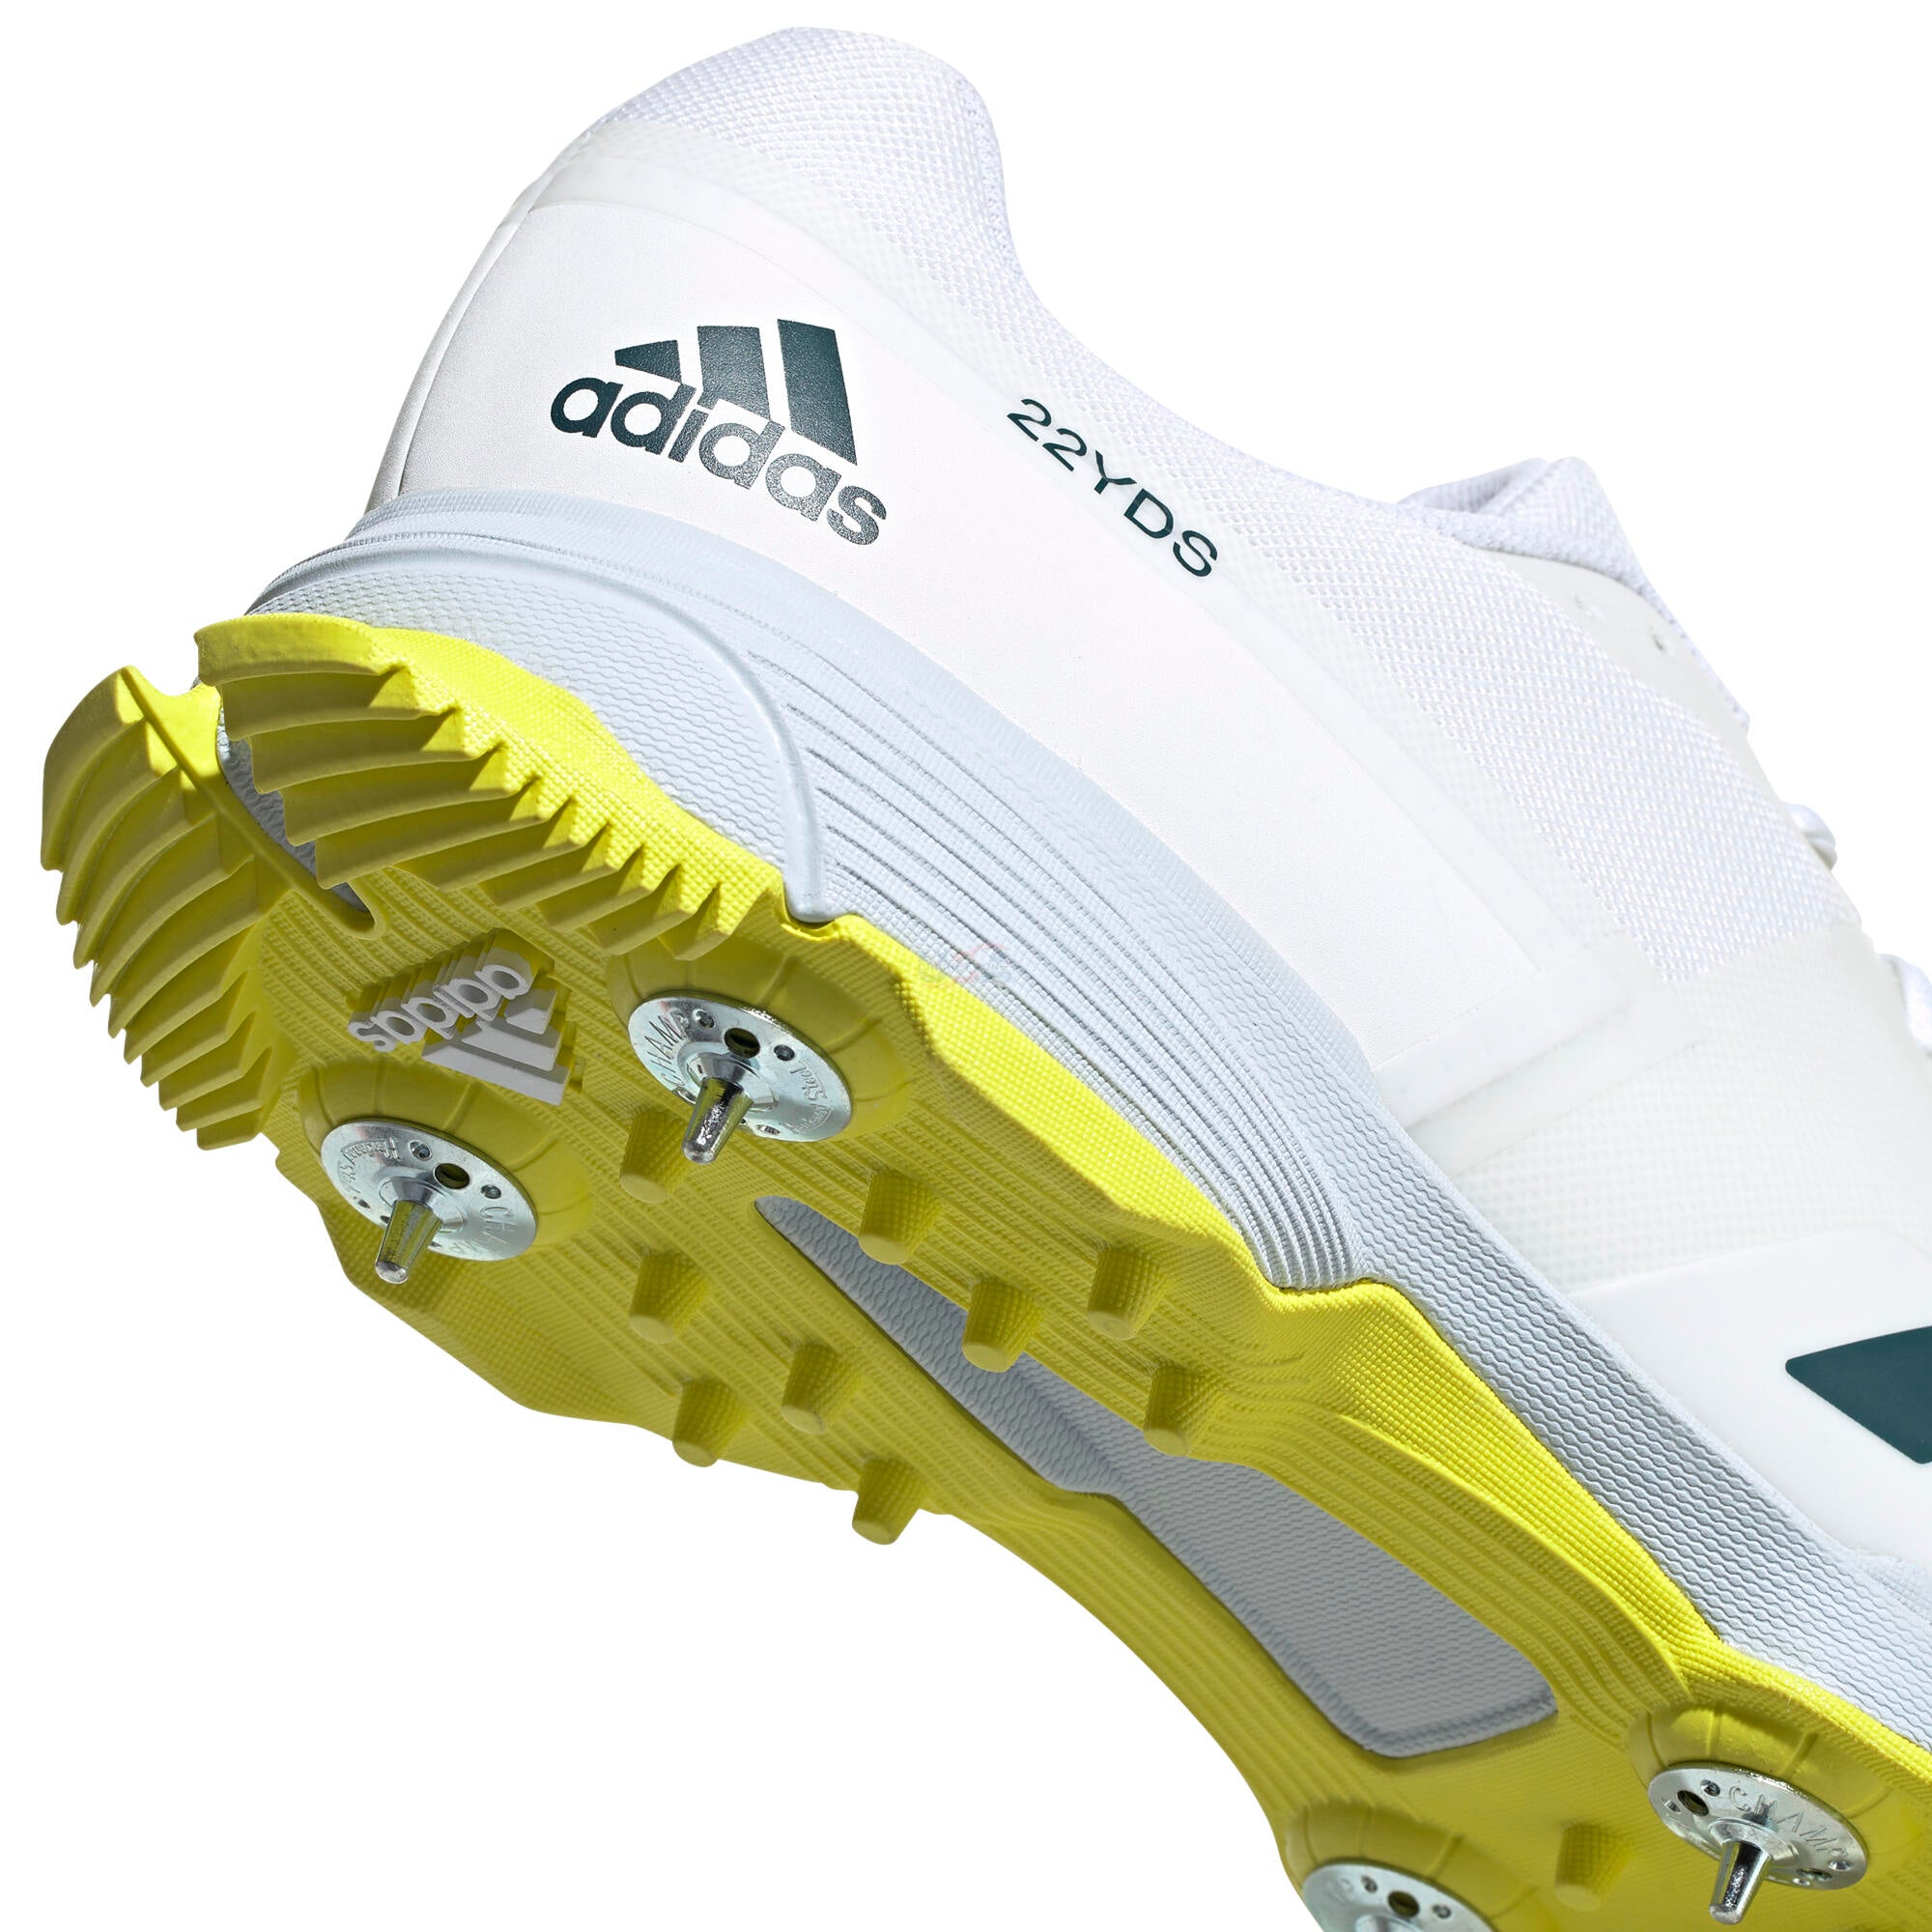 Adidas 22YDS Spikes - 2023